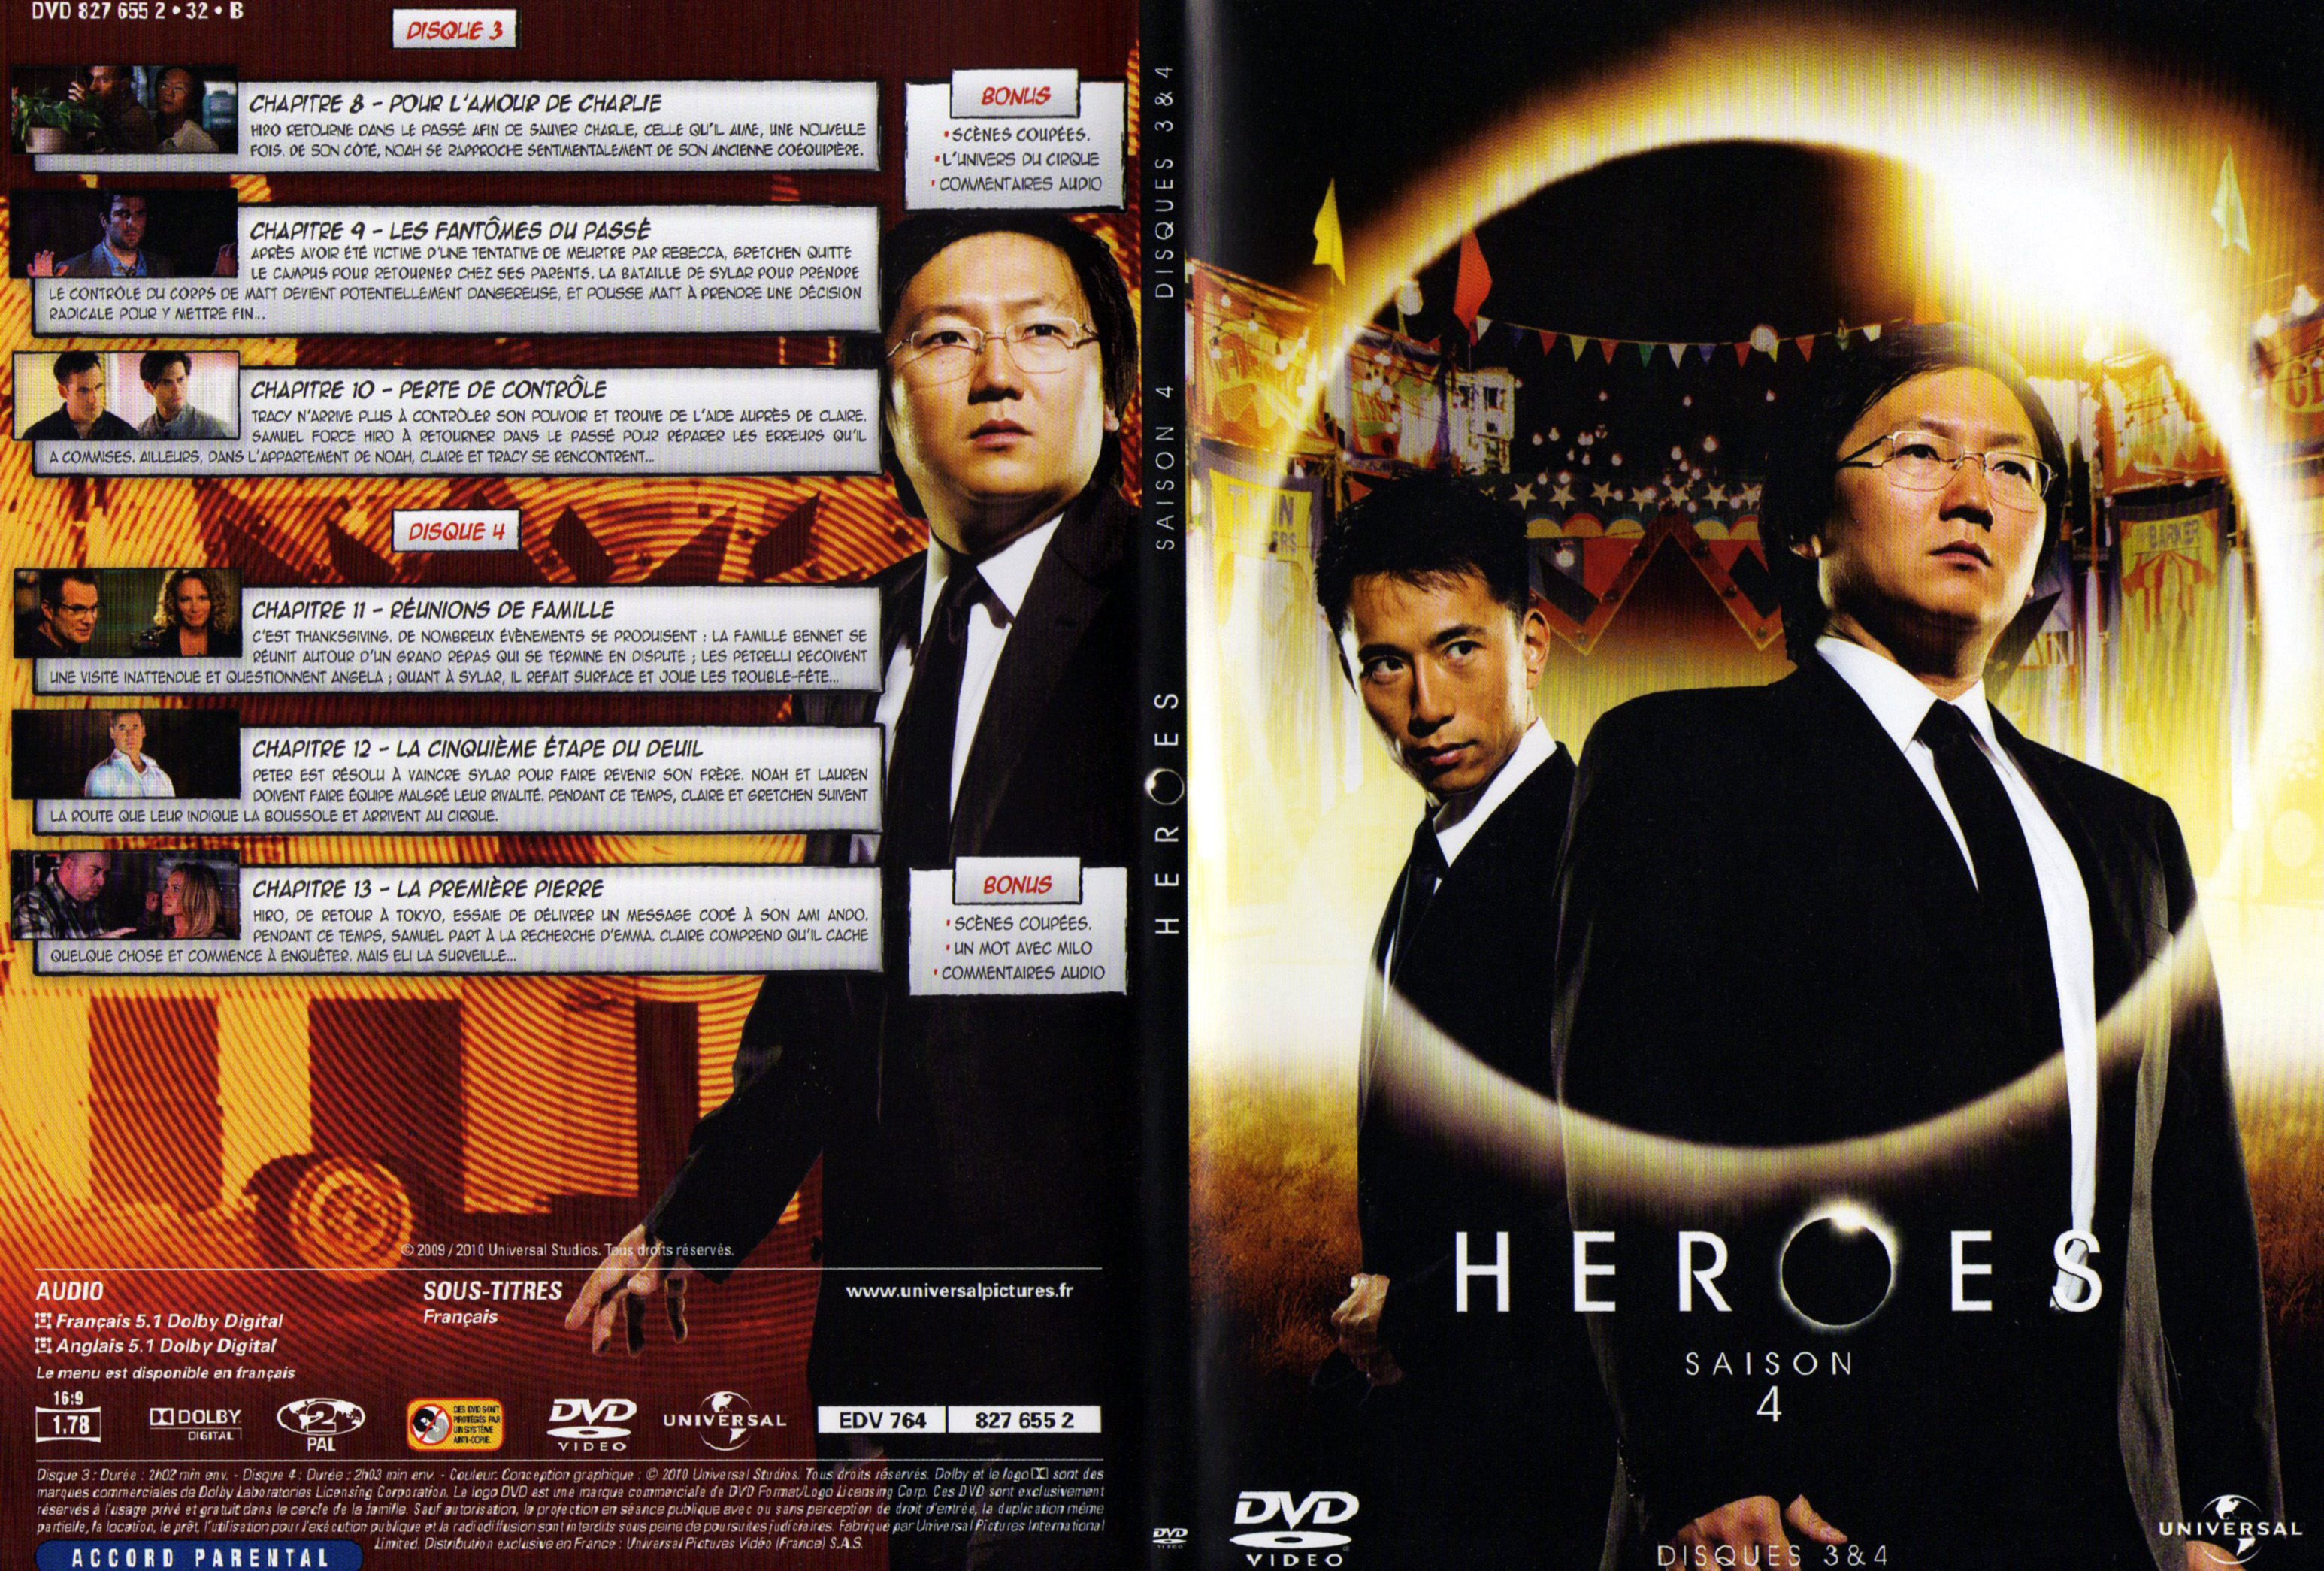 Jaquette DVD Heroes Saison 4 DVD 2